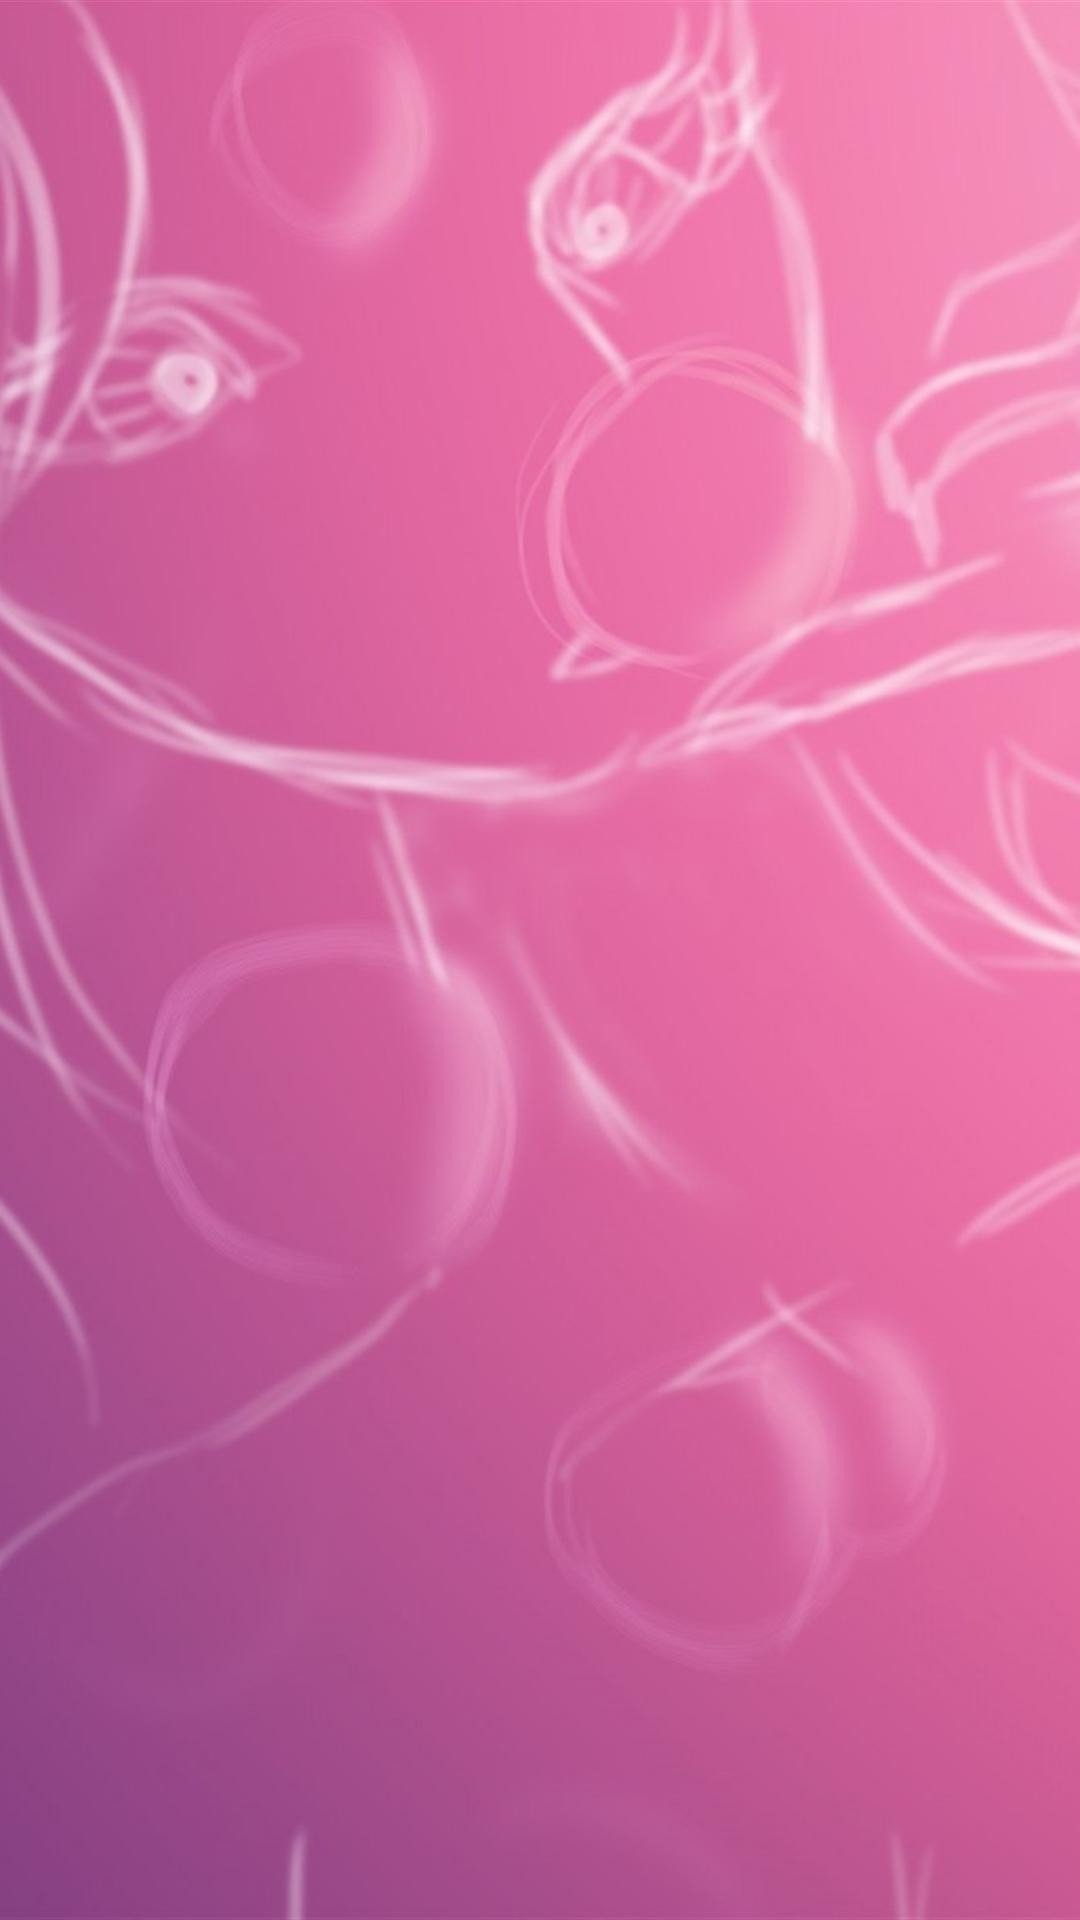 Cool Pink Iphone Desktop Wallpaper